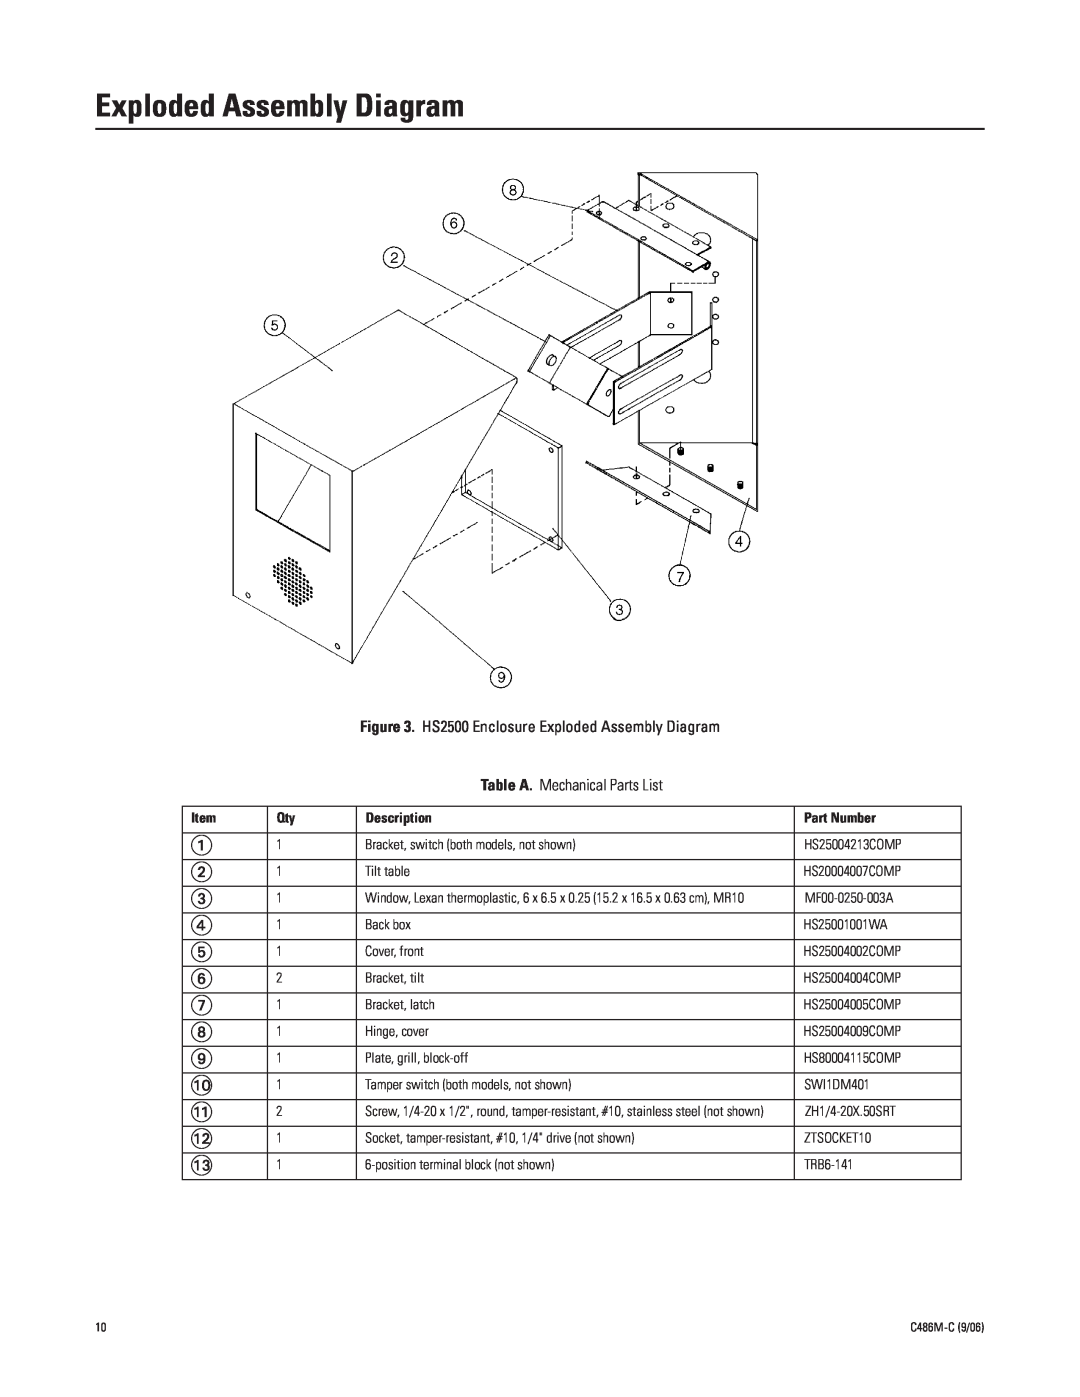 Pelco hs2500 manual Exploded Assembly Diagram, Table A. Mechanical Parts List, Description, Part Number 